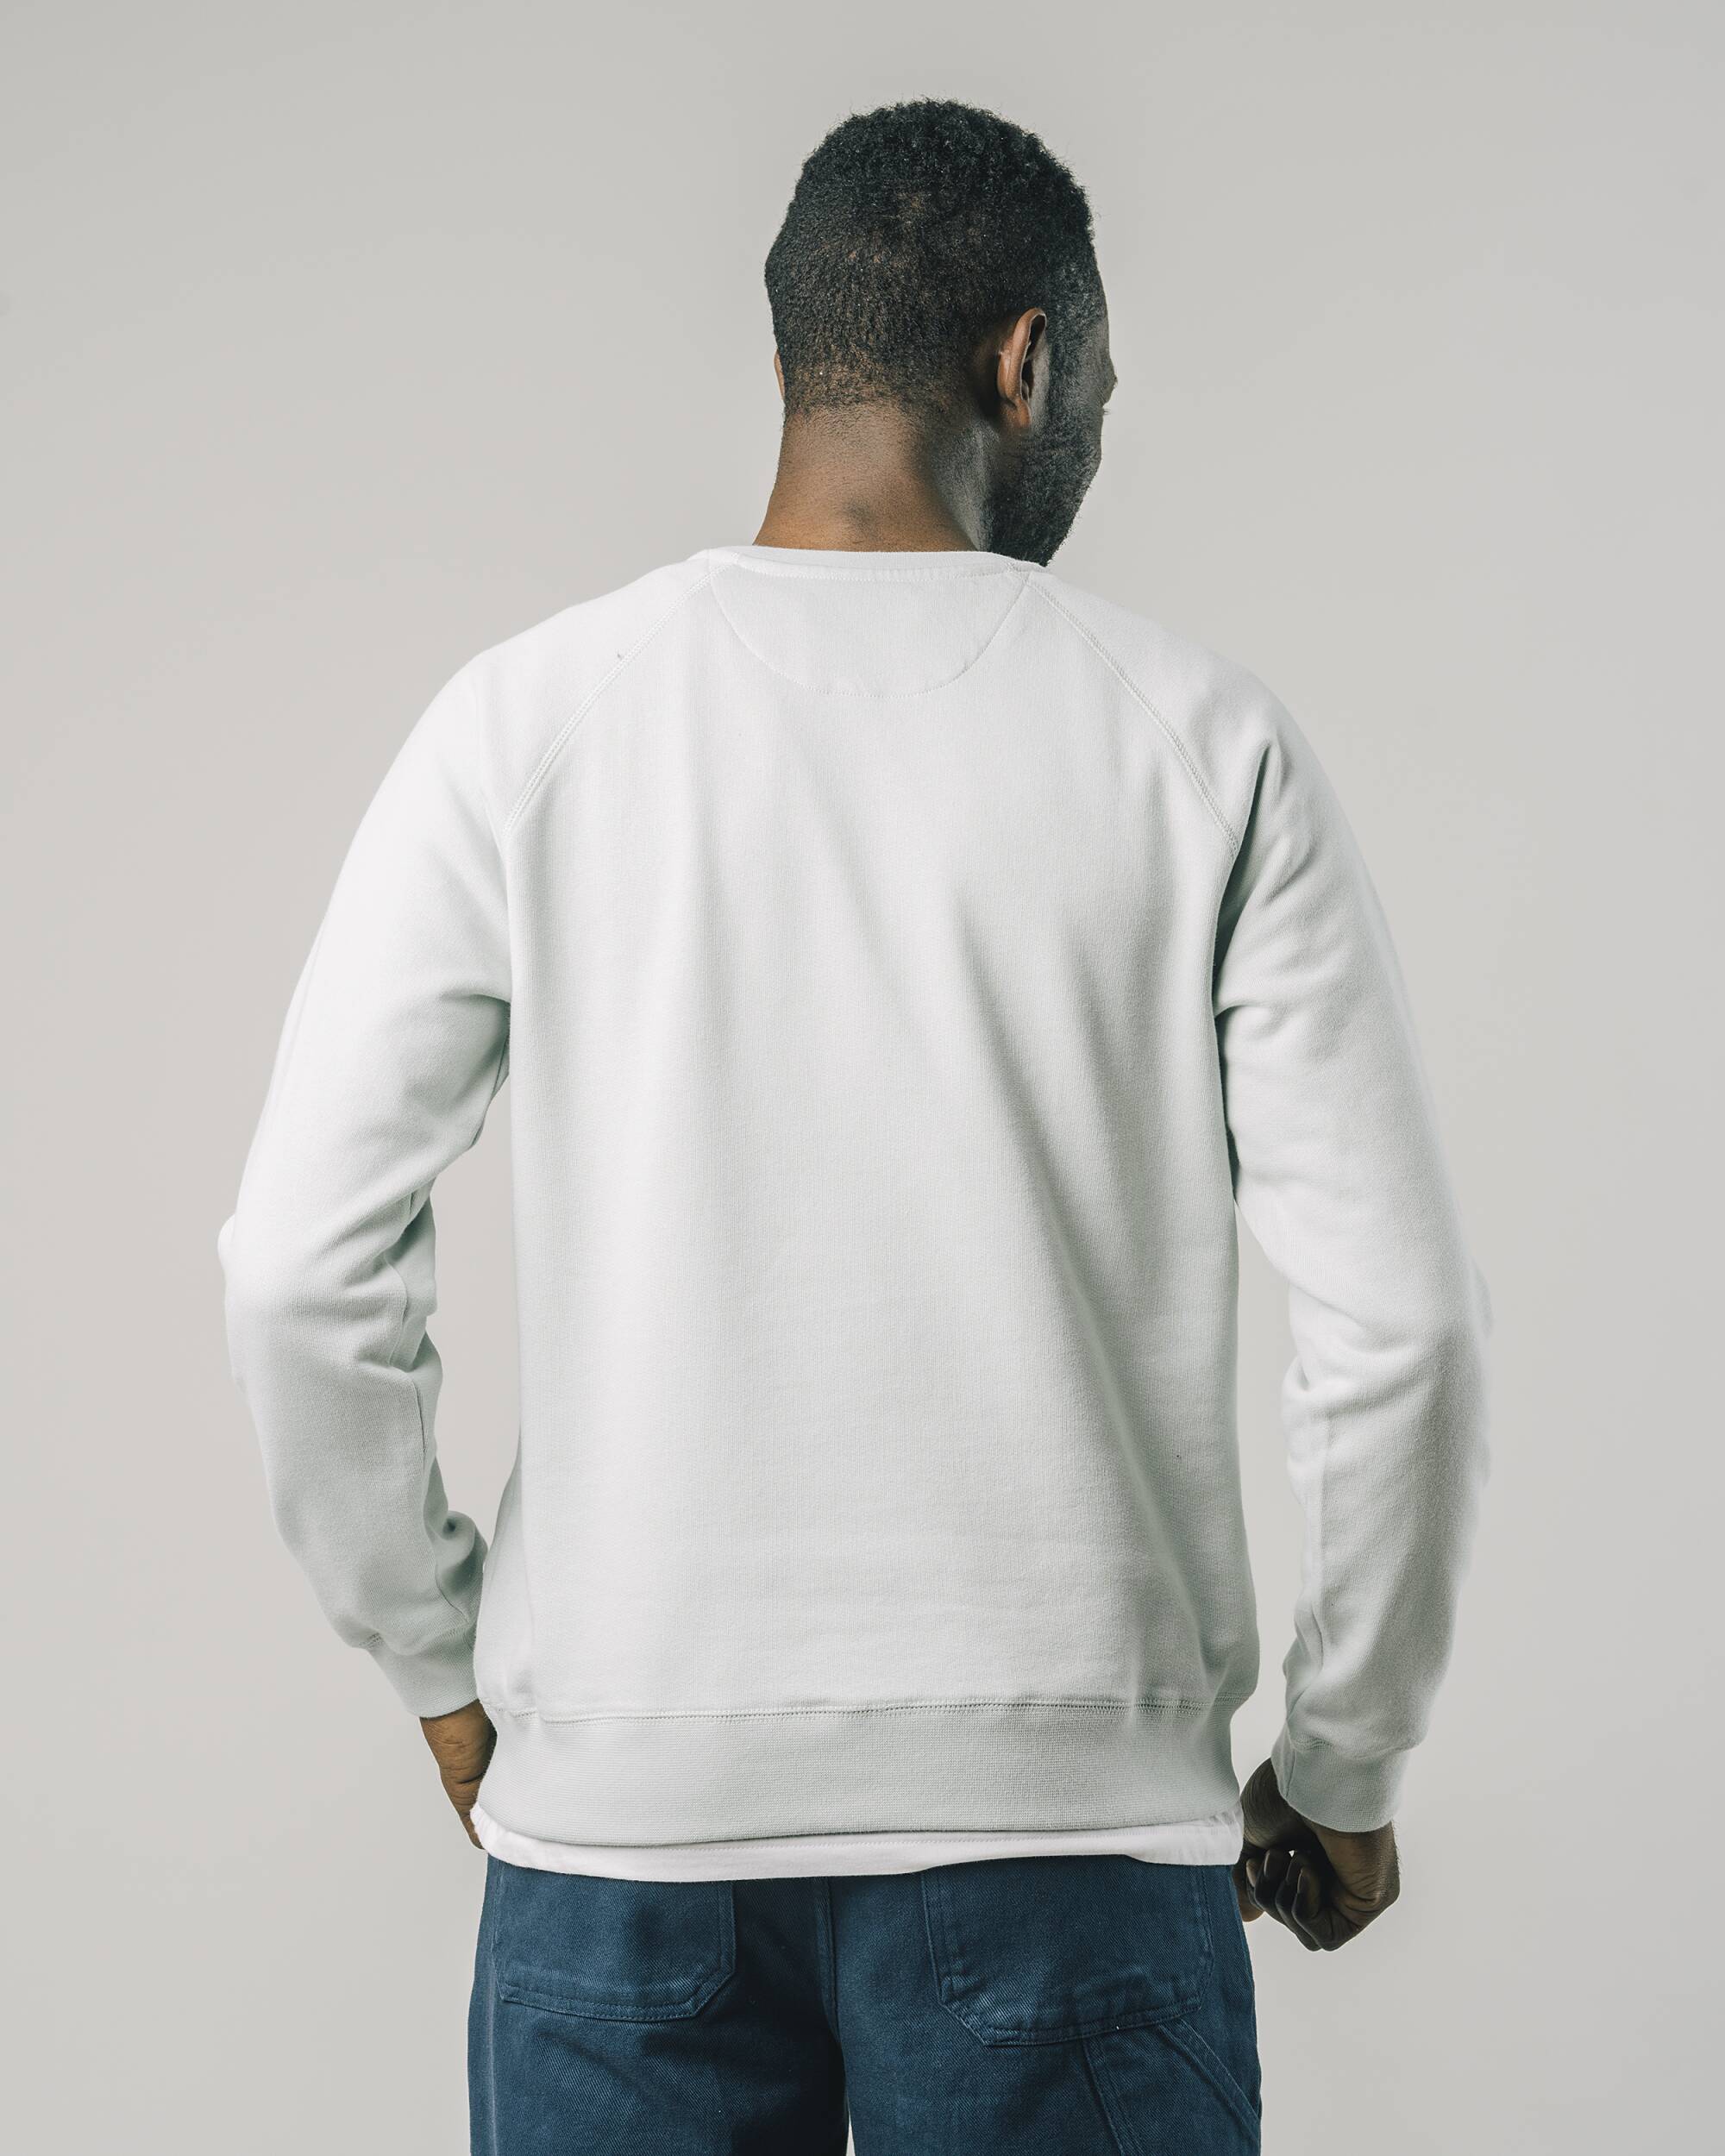 Sweat-shirt "Gobi" blanc en coton 100% biologique de Brava Fabrics